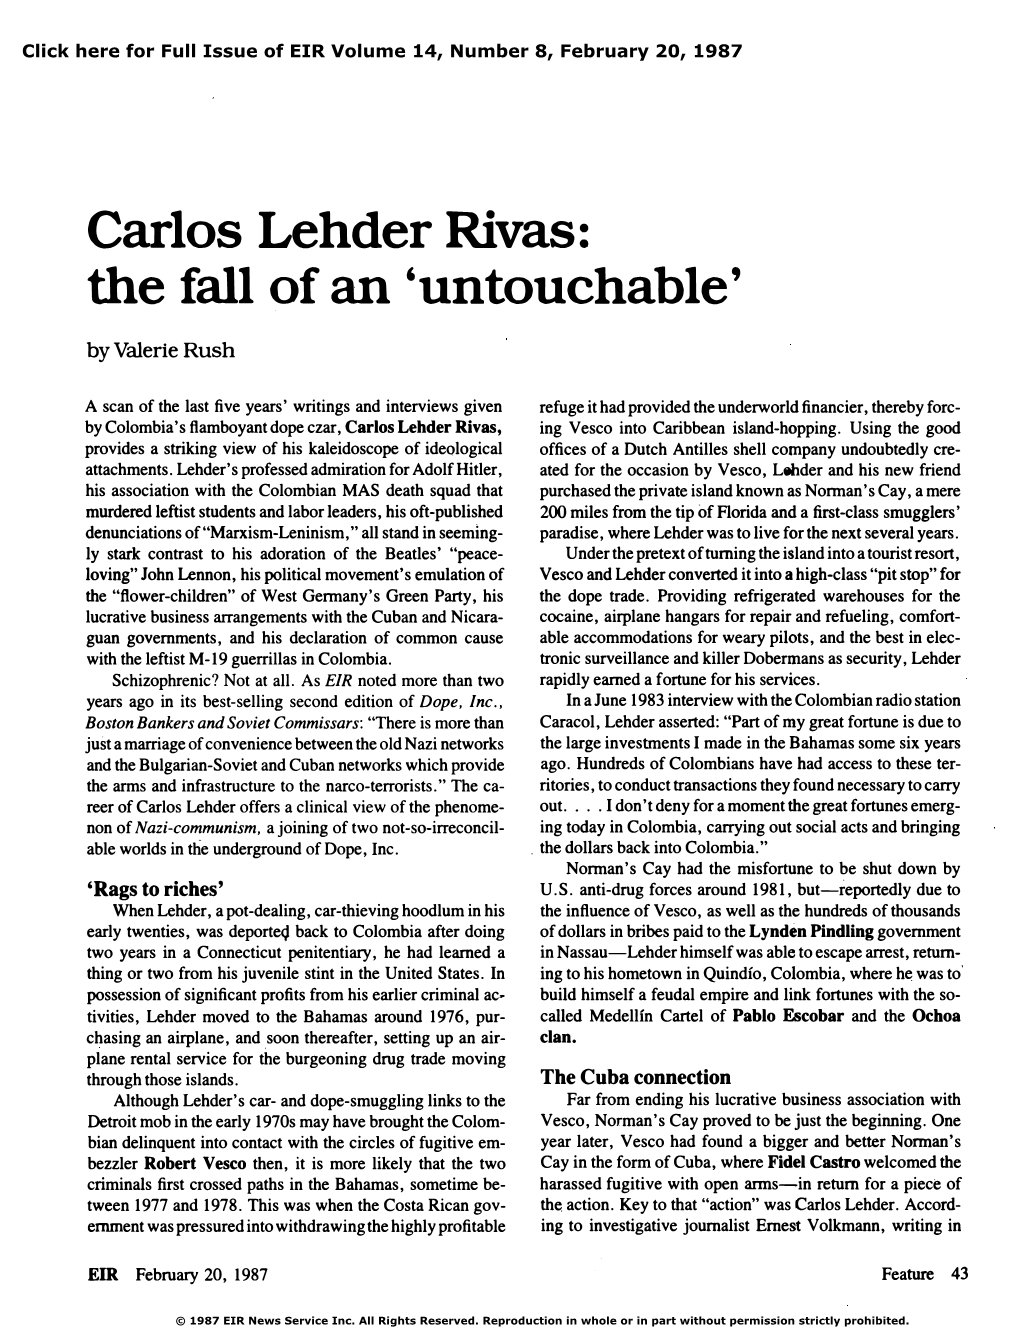 Carlos Lehder Rivas: the Fall of an 'Untouchable'